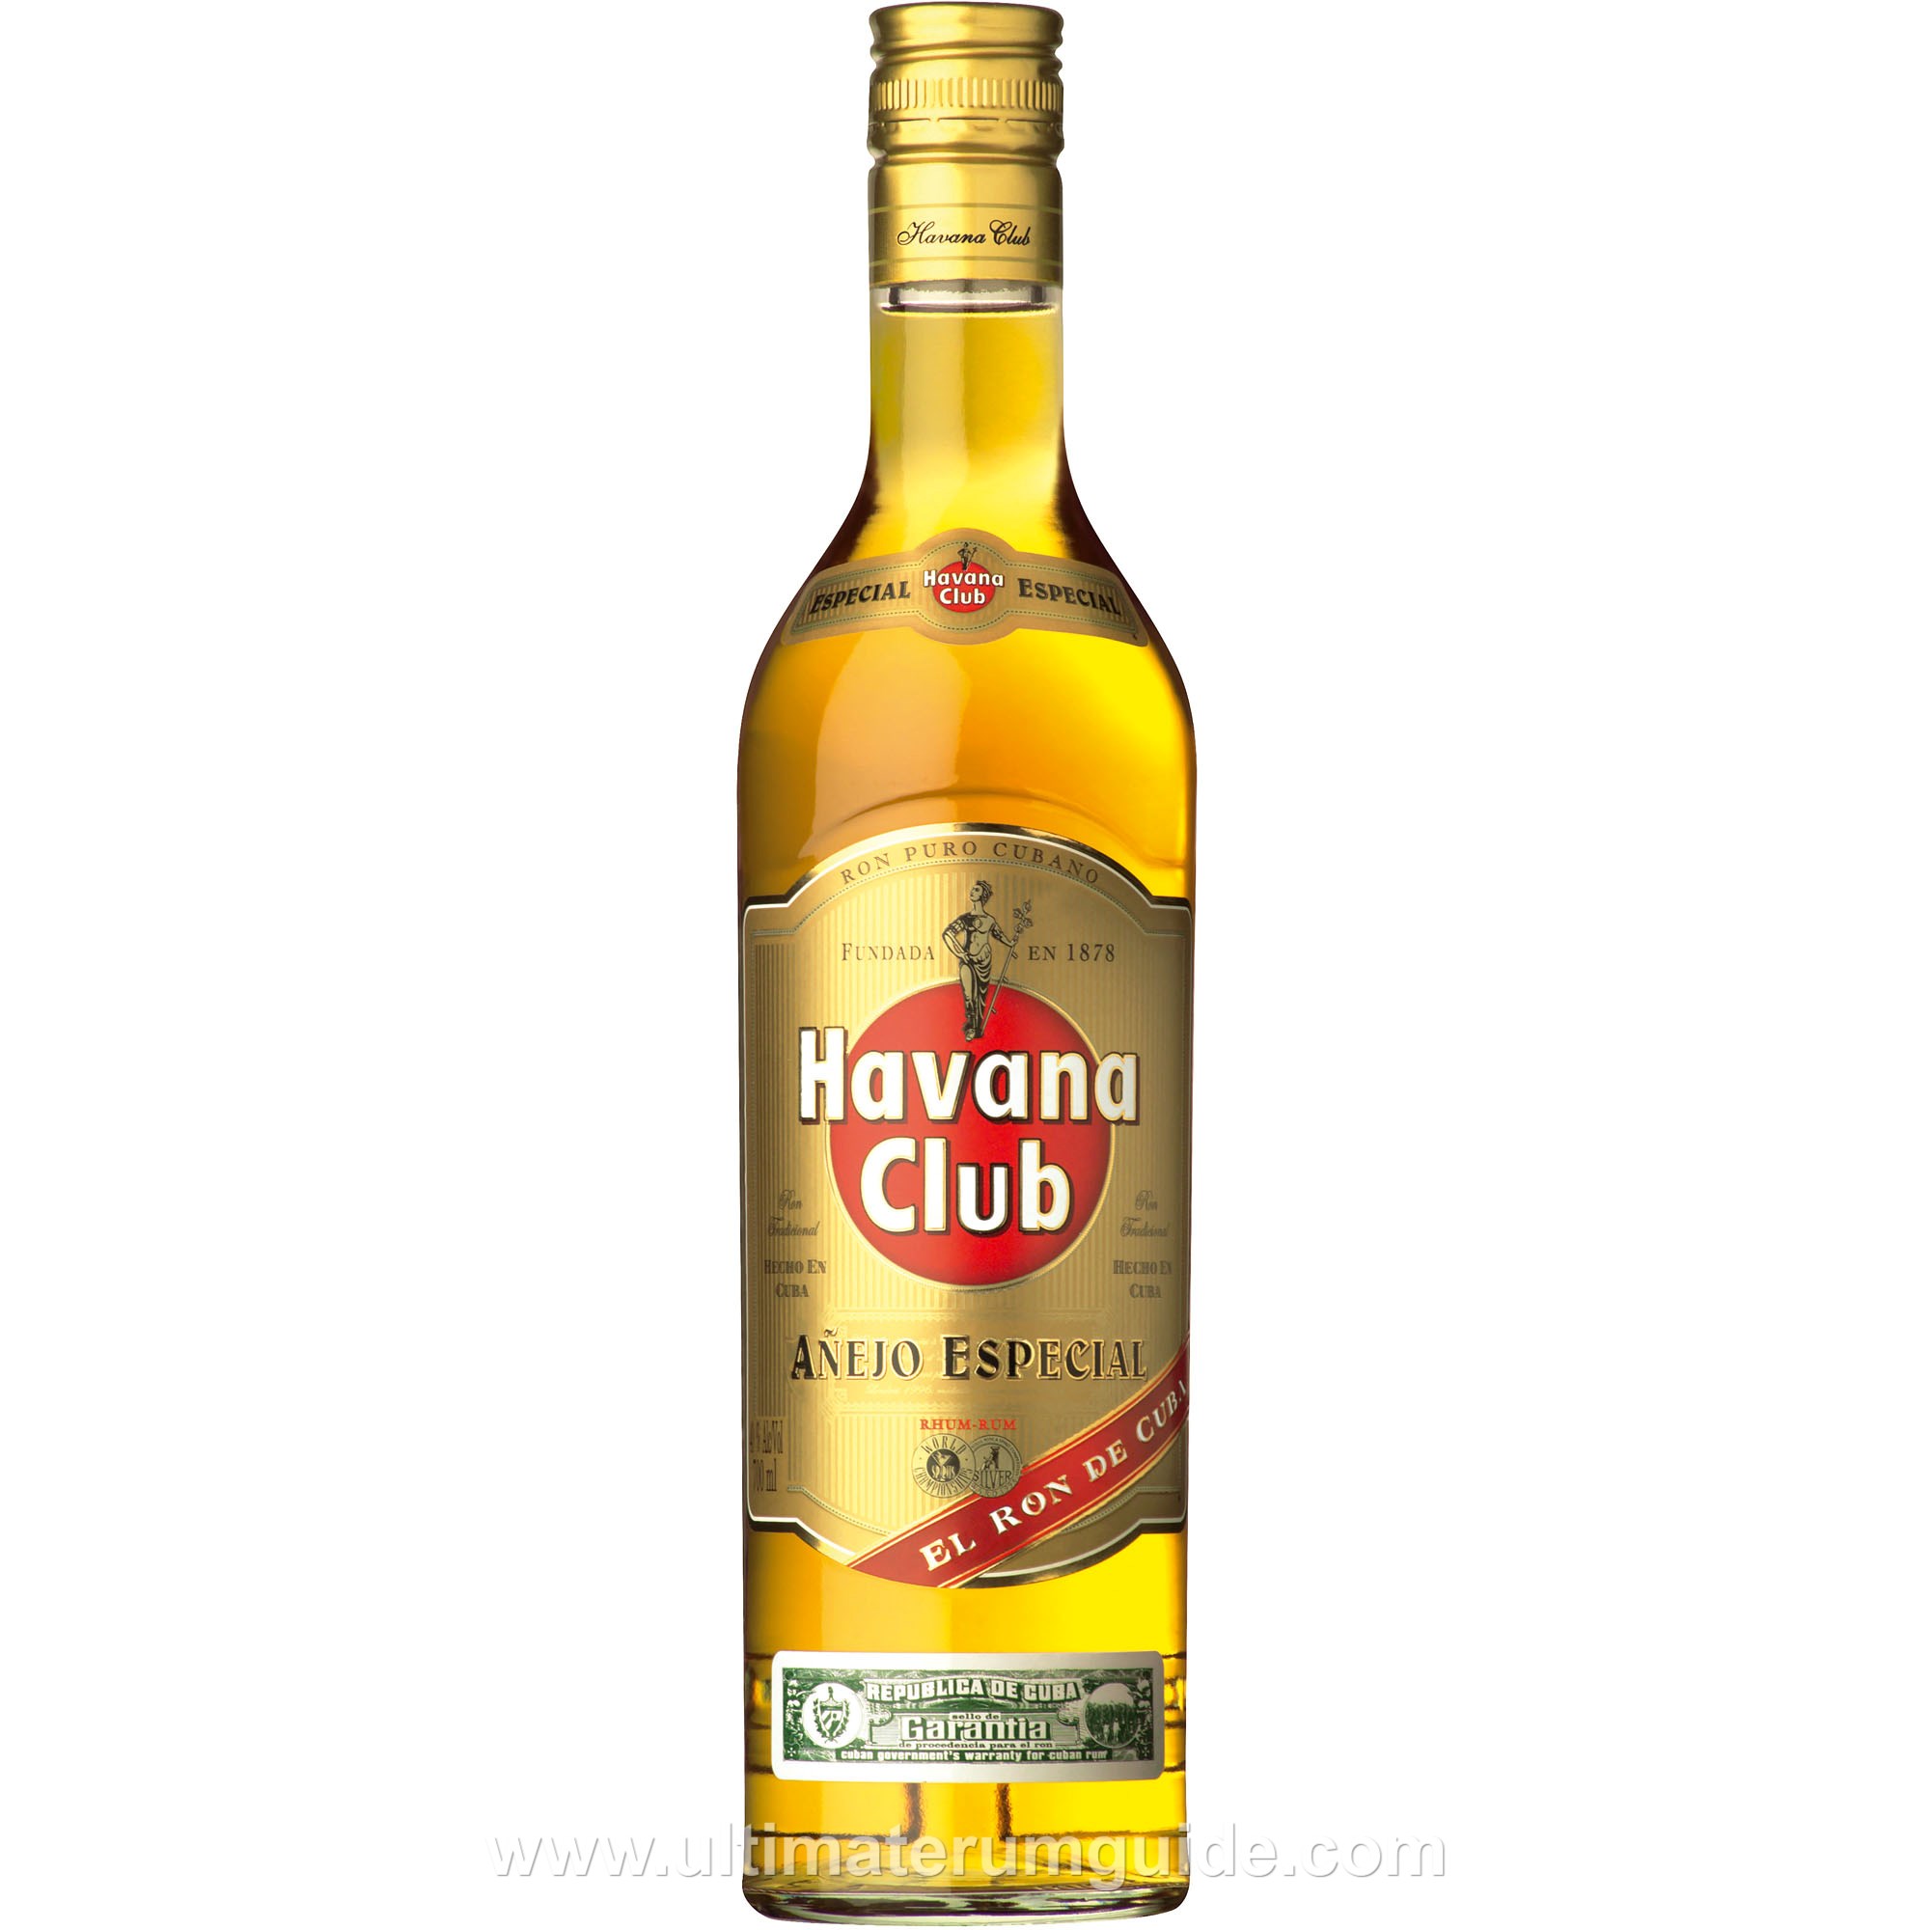 Havana Club Anejo Especial – Ultimate Rum Guide